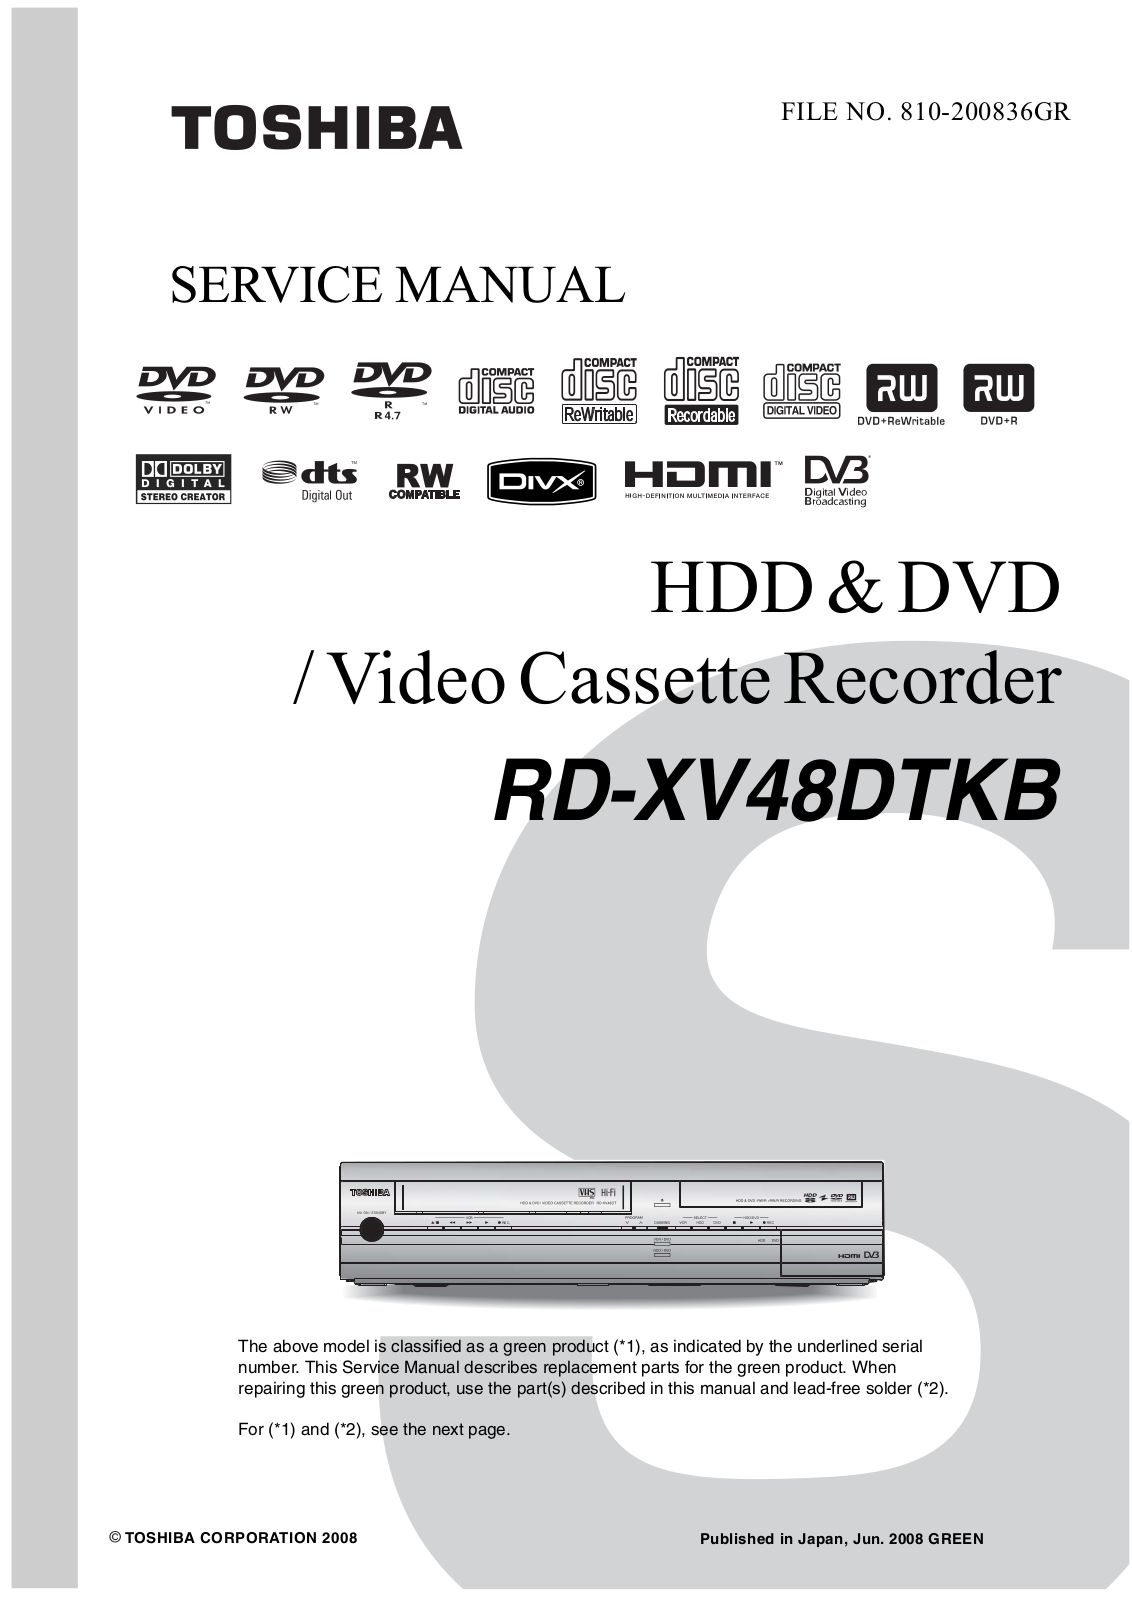 TOSHIBA RD-XV48DTKB Service Manual